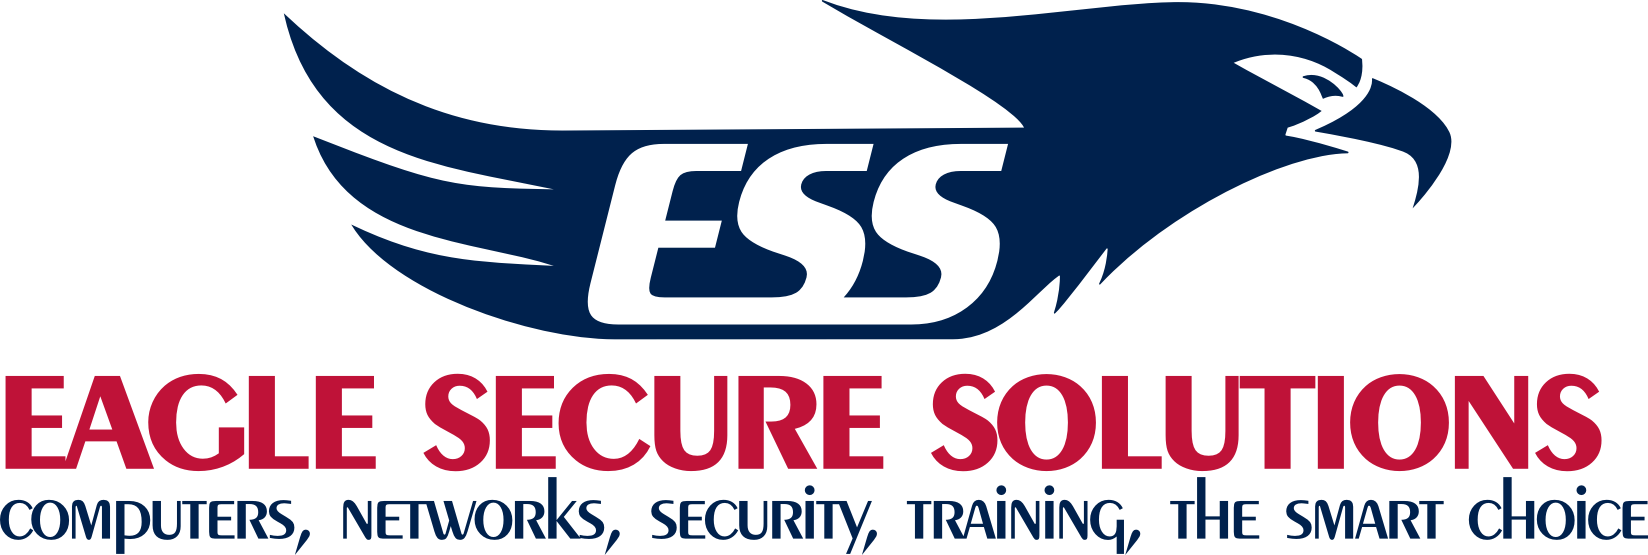 Eagle Secure Solutions, LLC Logo